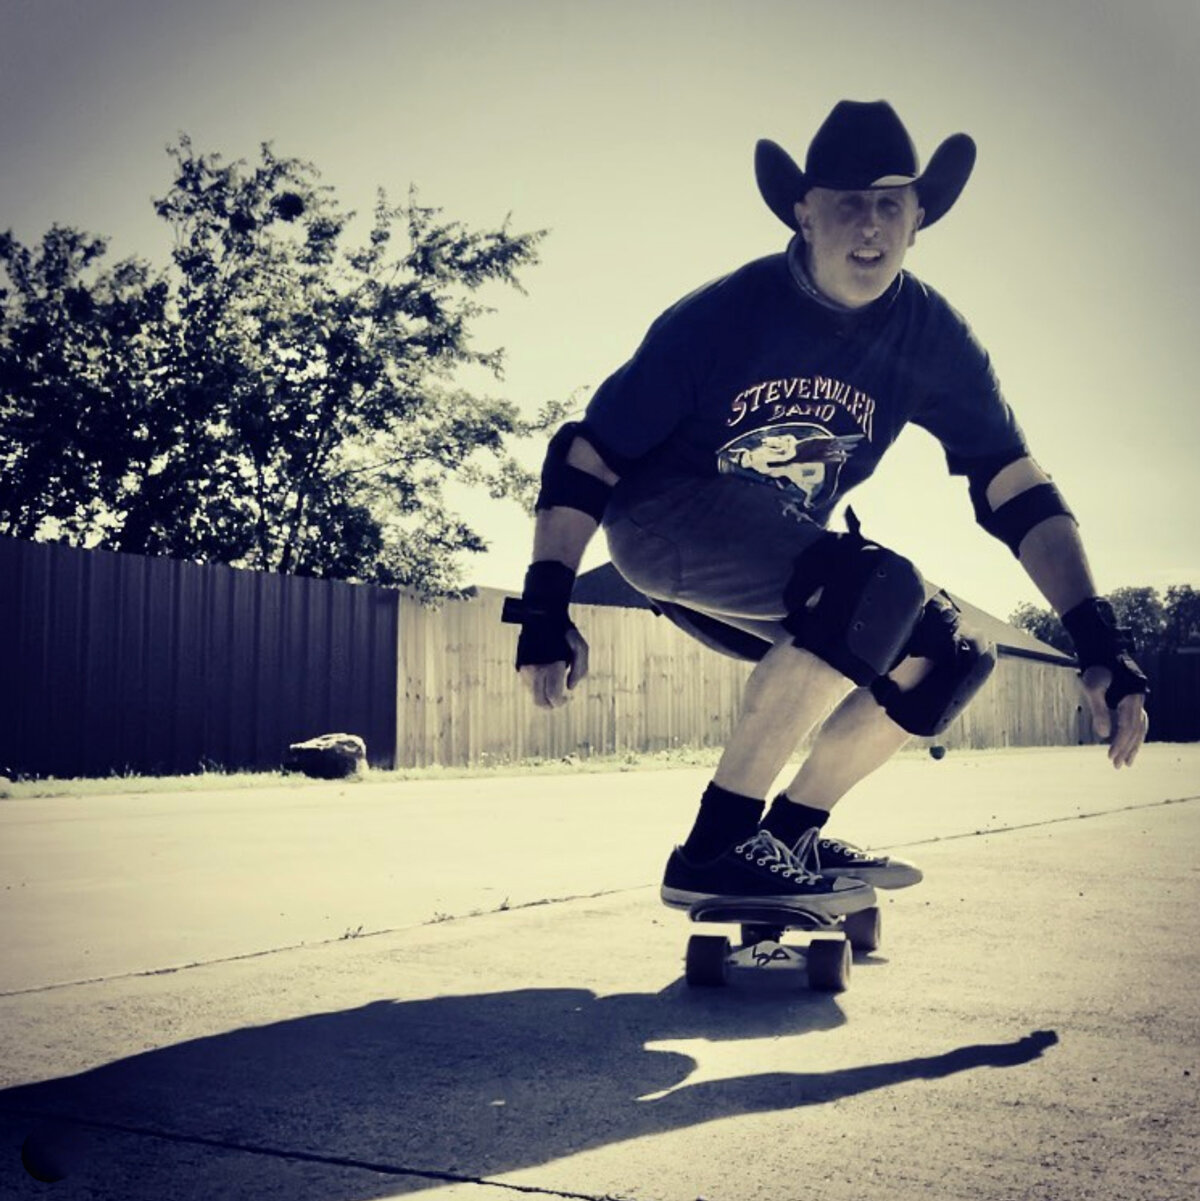 GW Childs IV rides a skateboard, wearing a black cowboy hat